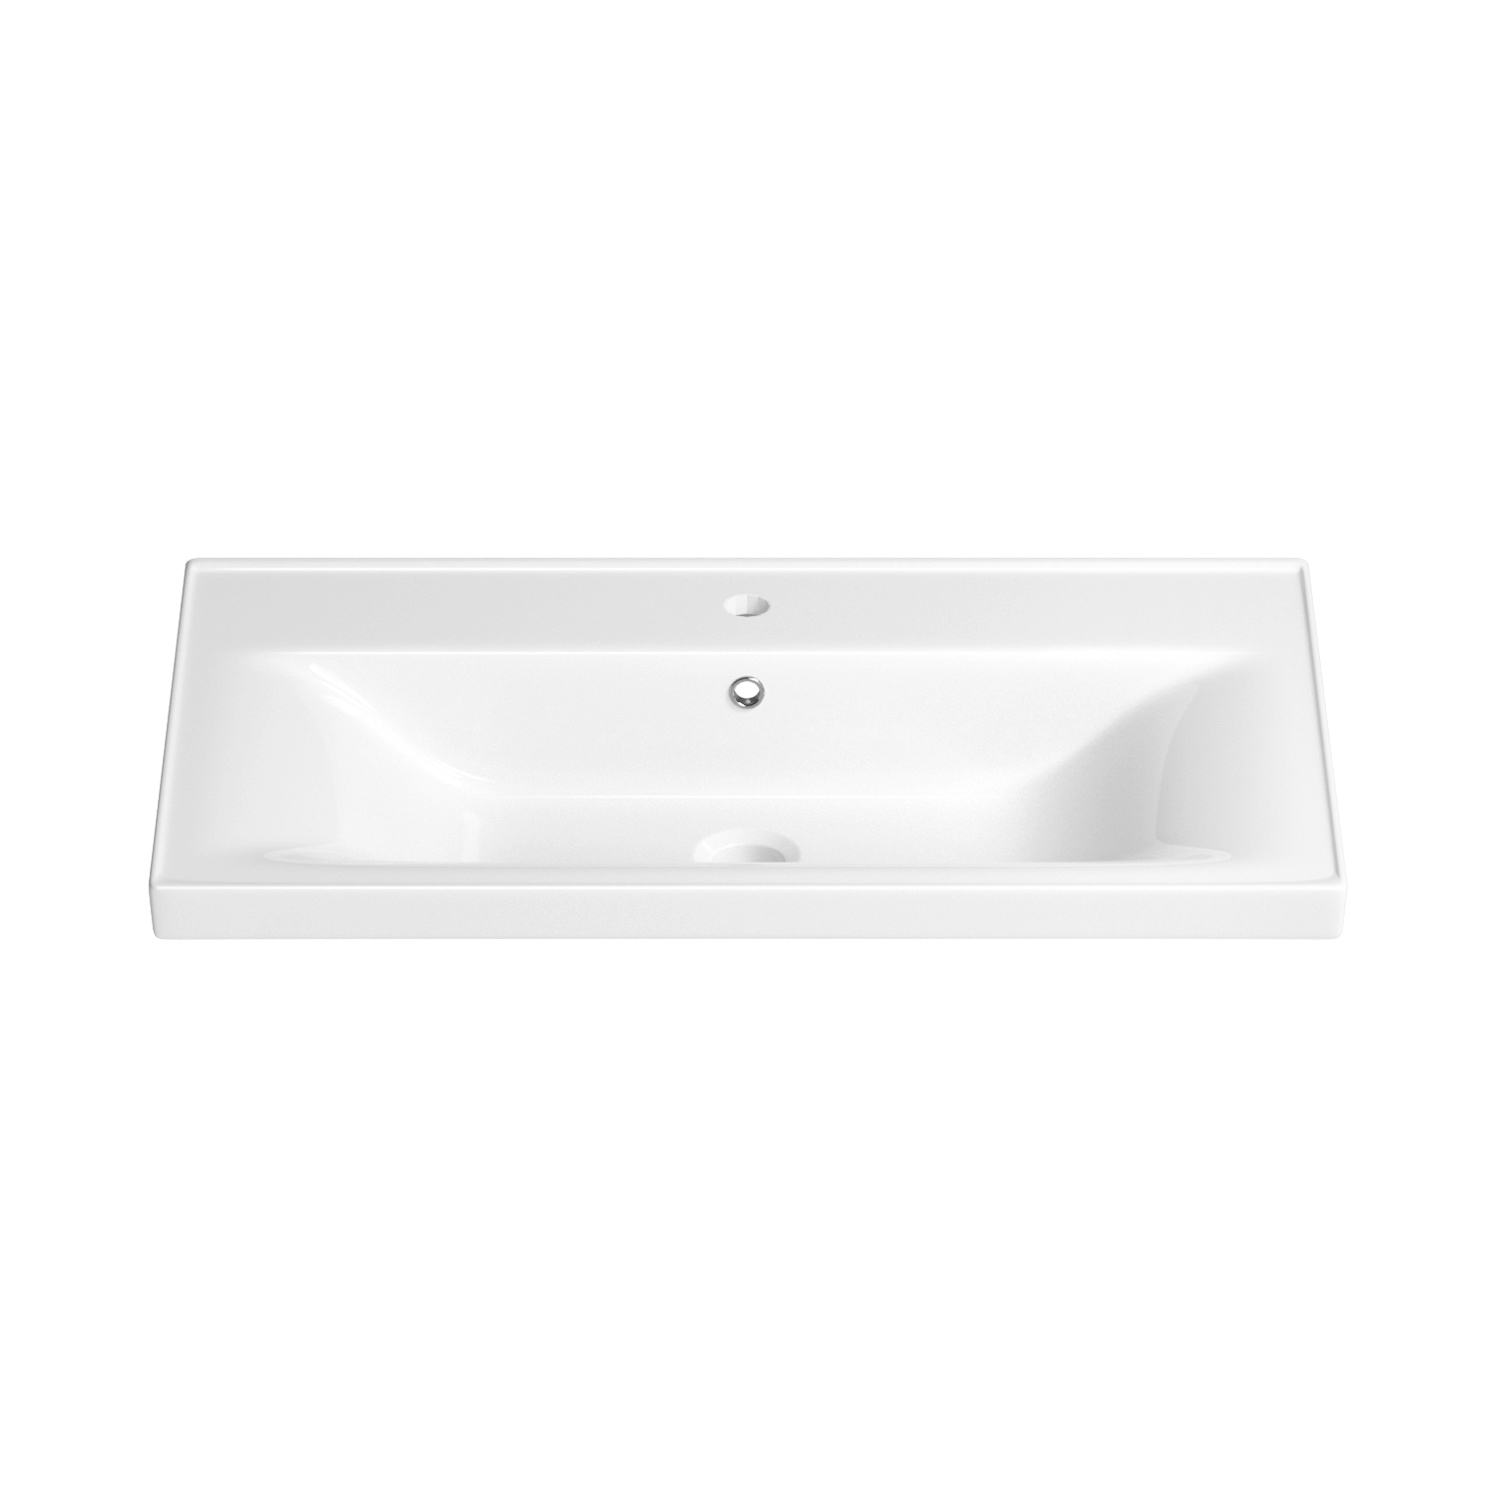 Подвесная раковина Wellsee FreeDom 151105000, ширина 70 см, глянцевый белый подвесная мебельная раковина для ванной wellsee